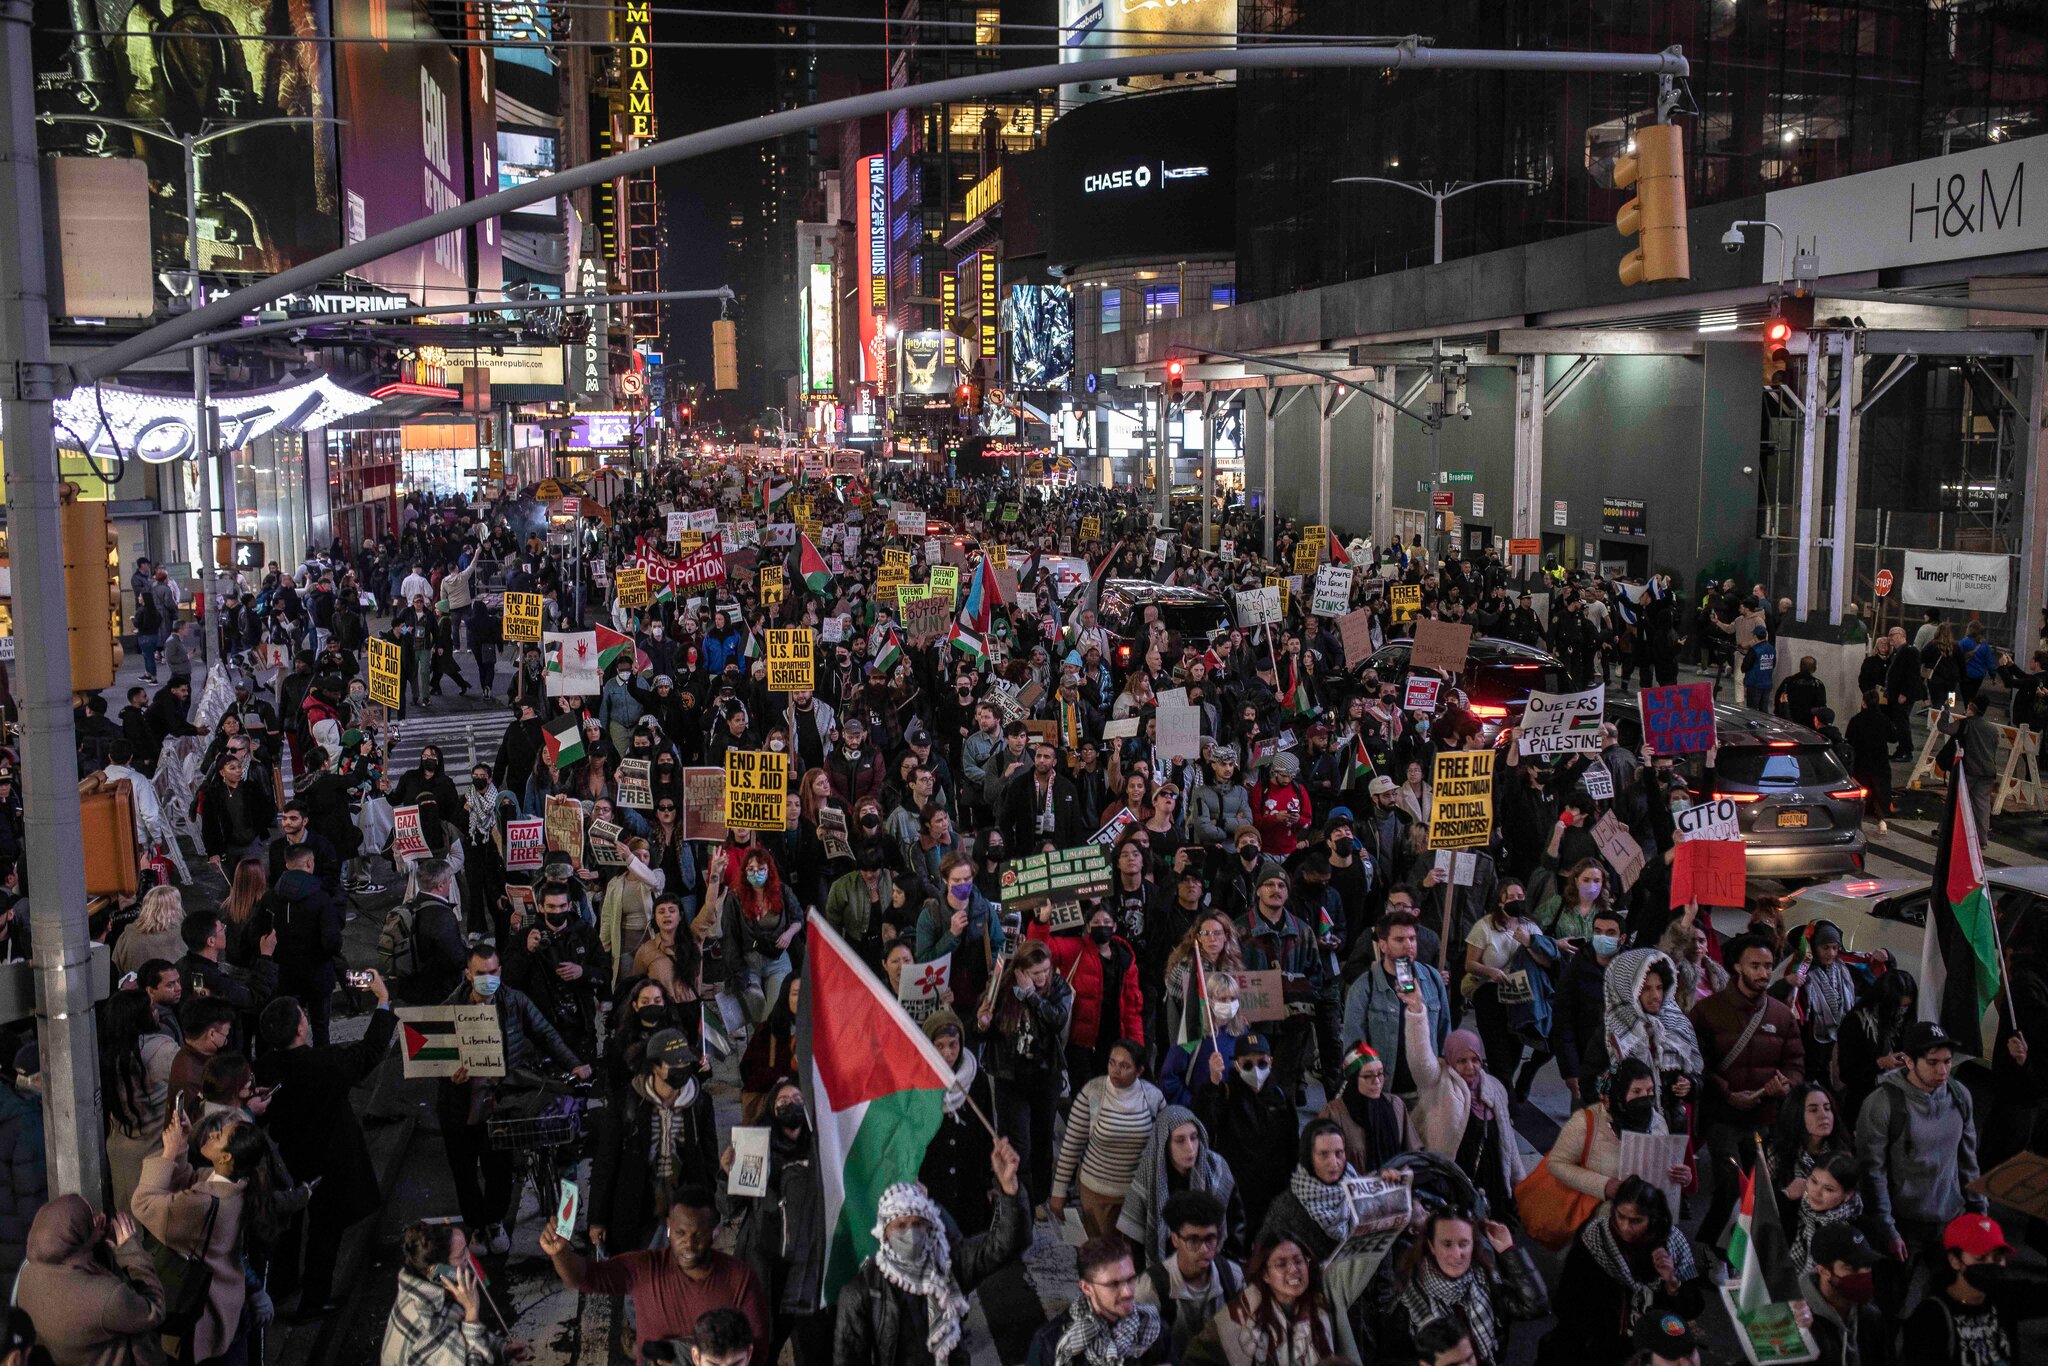 Protes di NYC desak gencatan senjata ketika angka korban di Gaza hampiri 20,000 orang